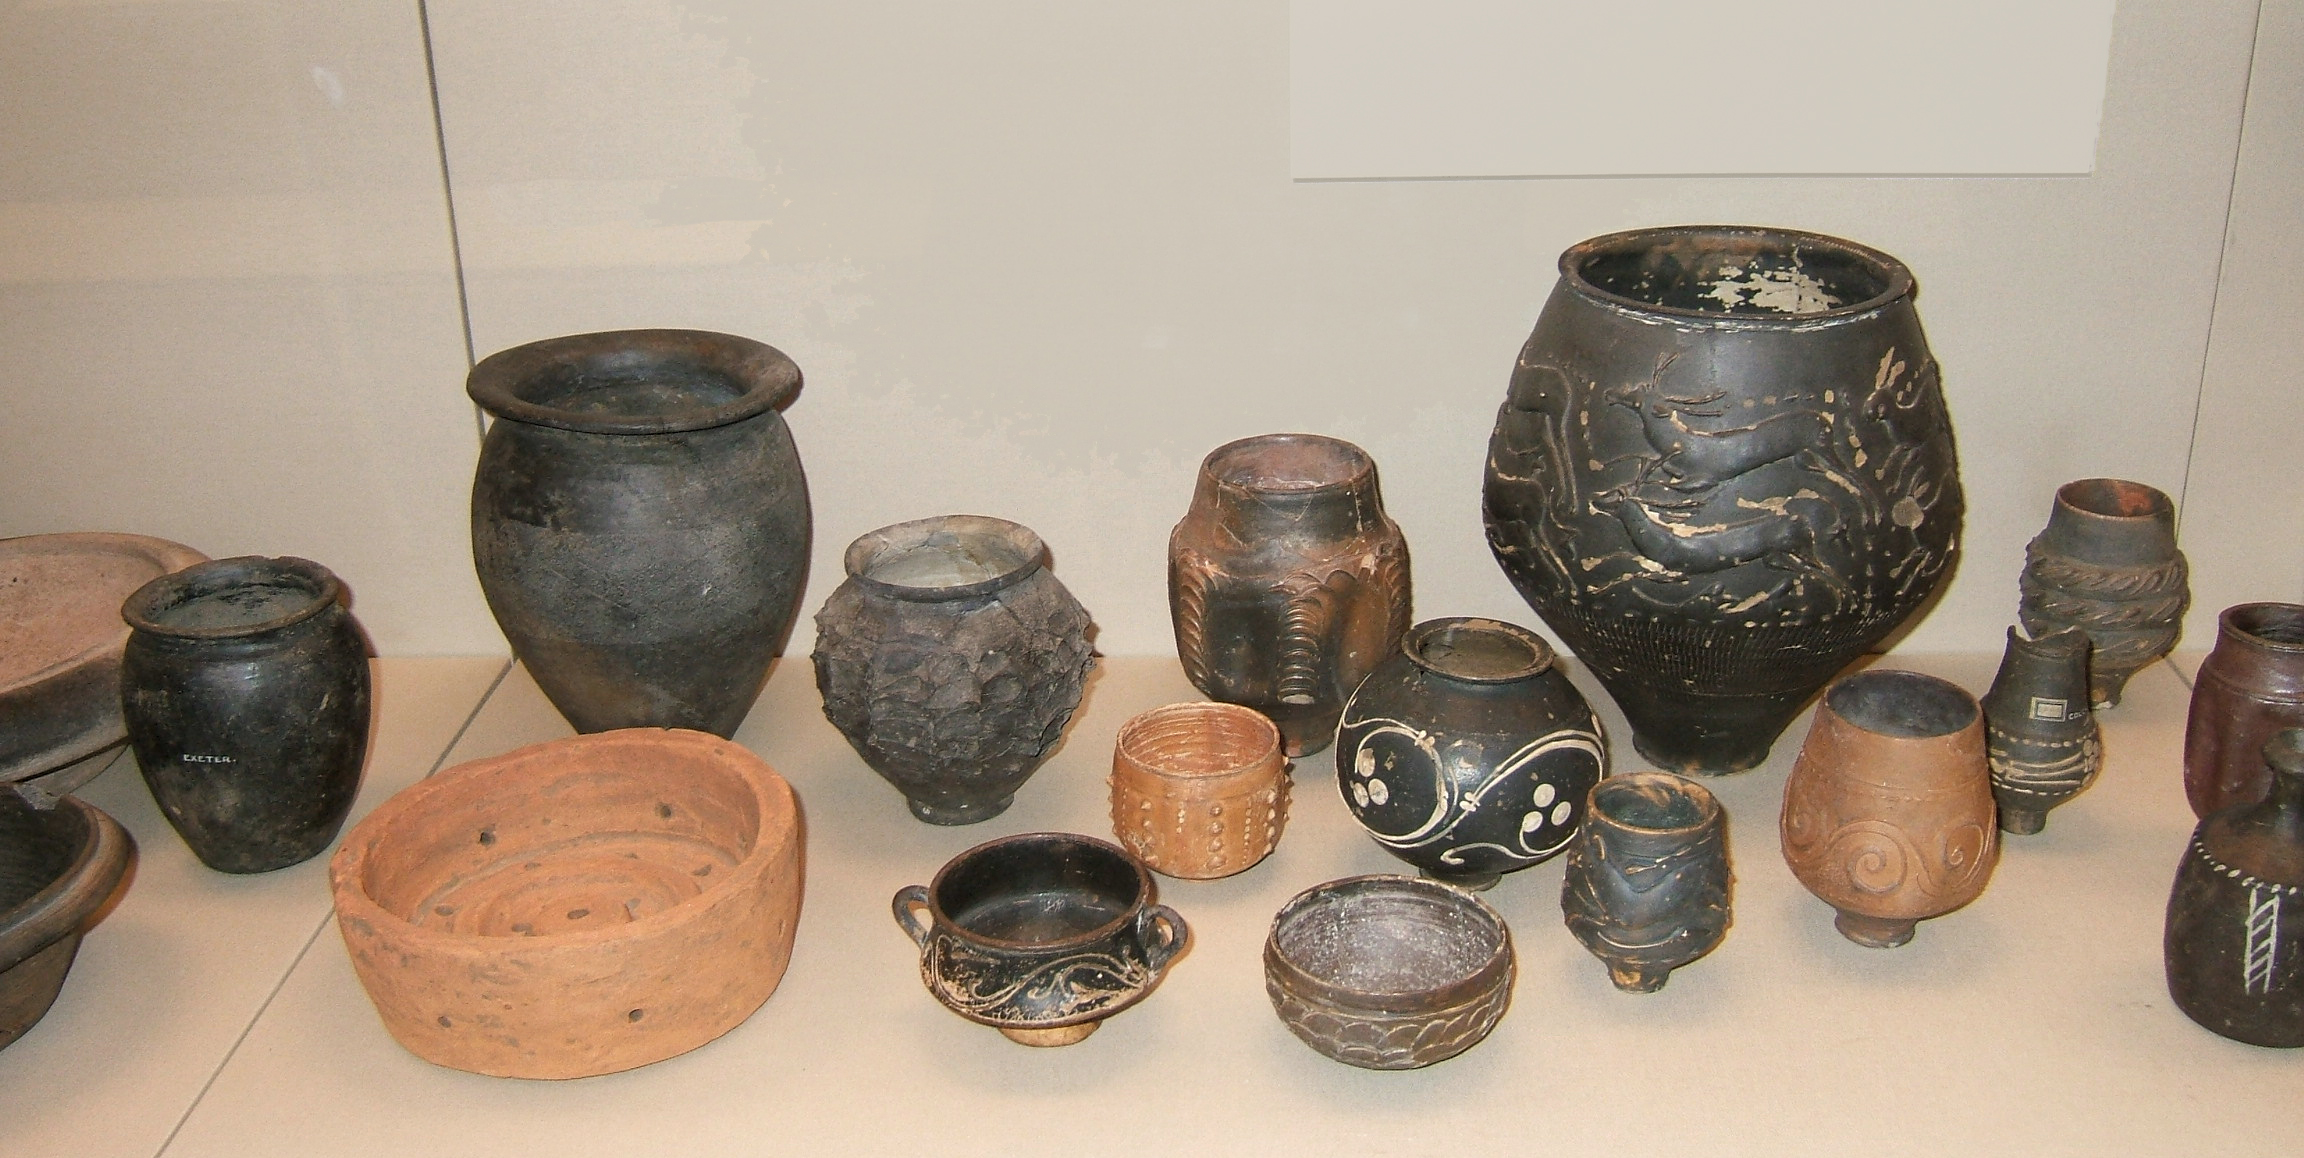 Ancient Roman pottery - Wikipedia, the free encyclopedia